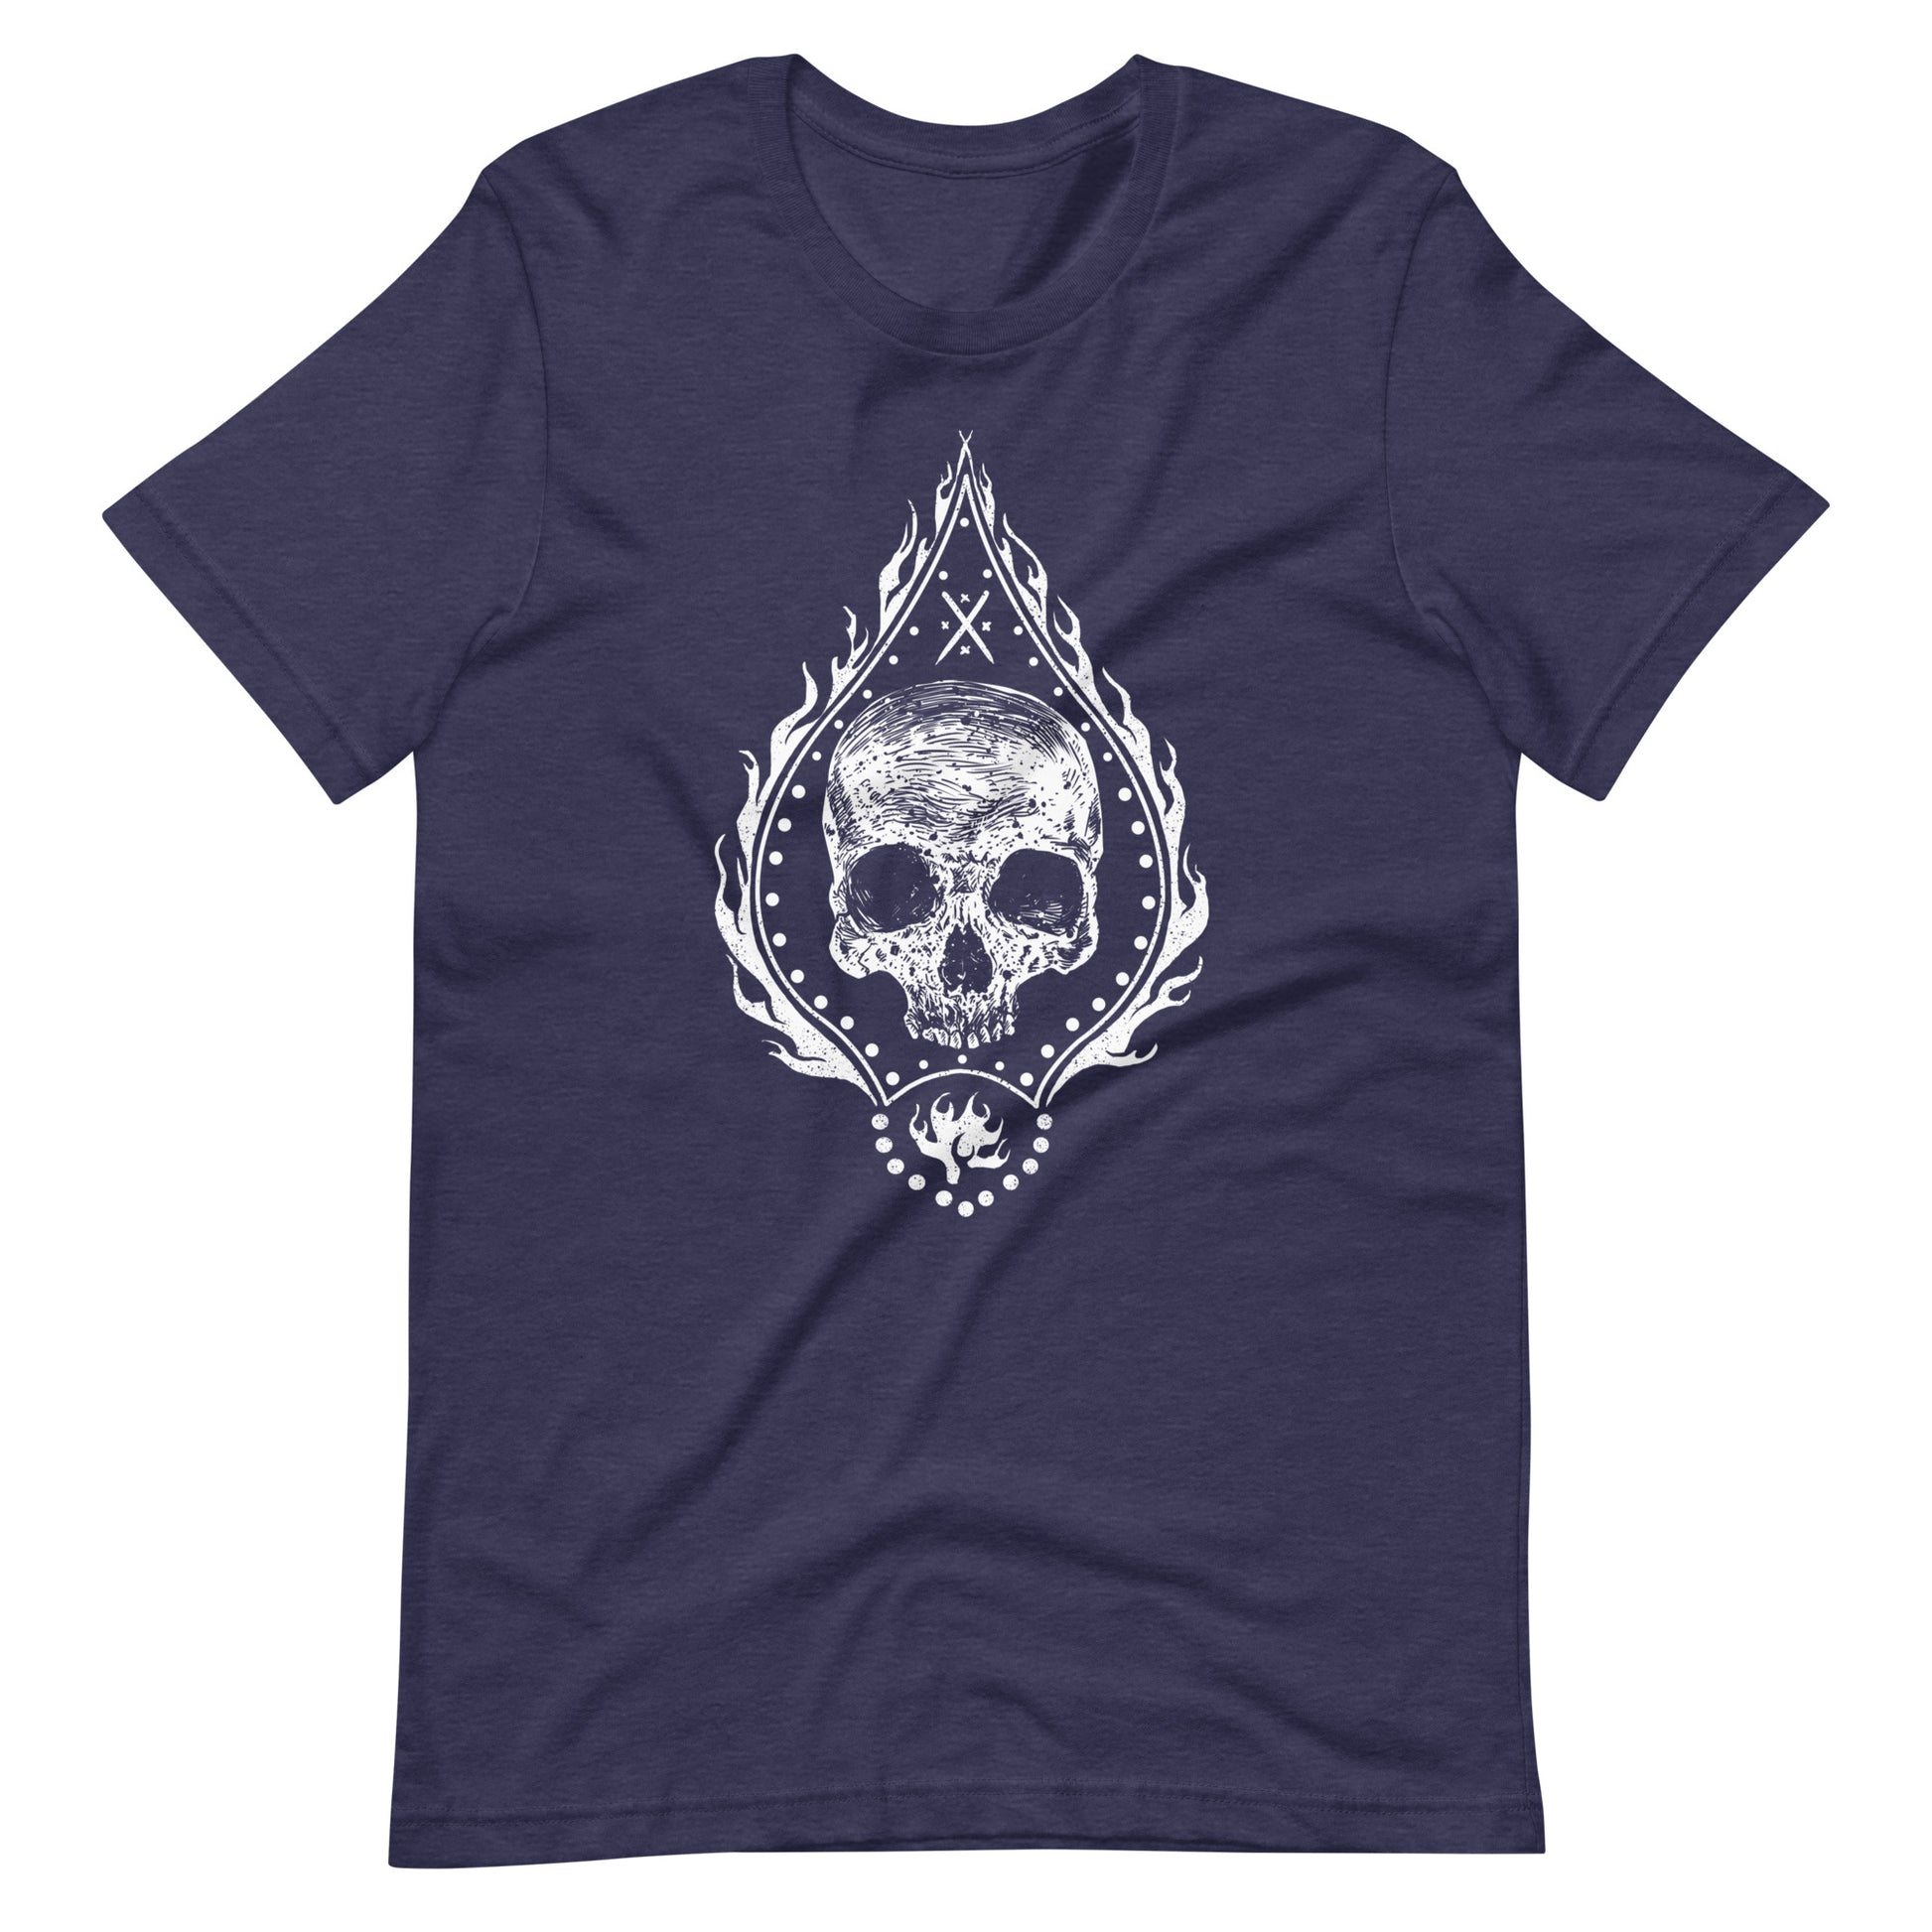 Fire Skull White - Men's t-shirt - Heather Midnight Navy Front